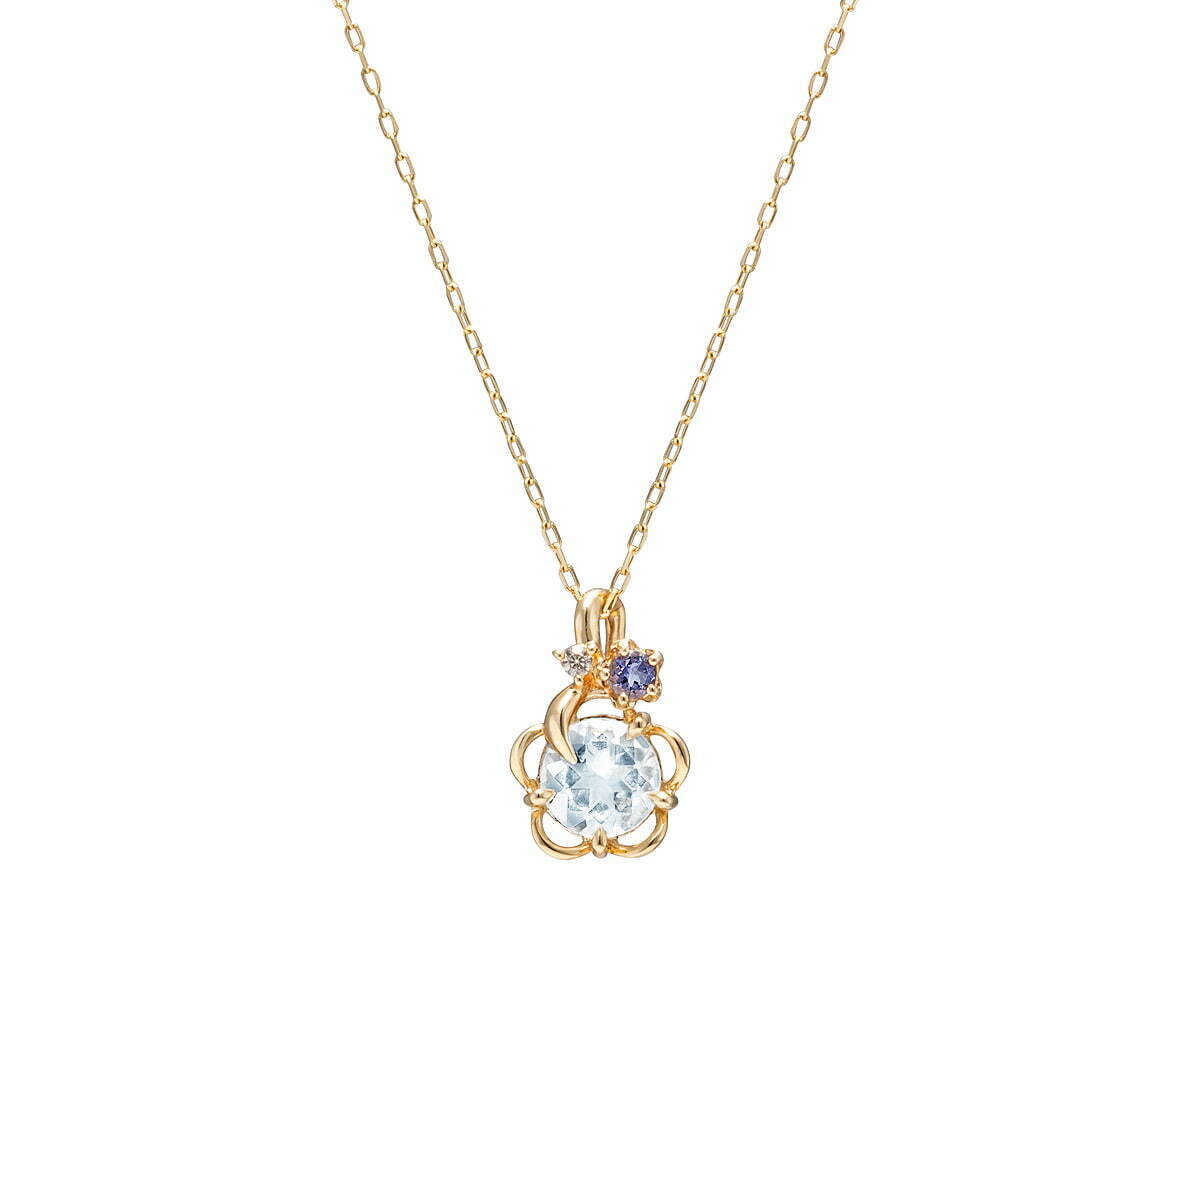 K10YG Necklace /Aquamarine/Diamond/Iolite 33,000円